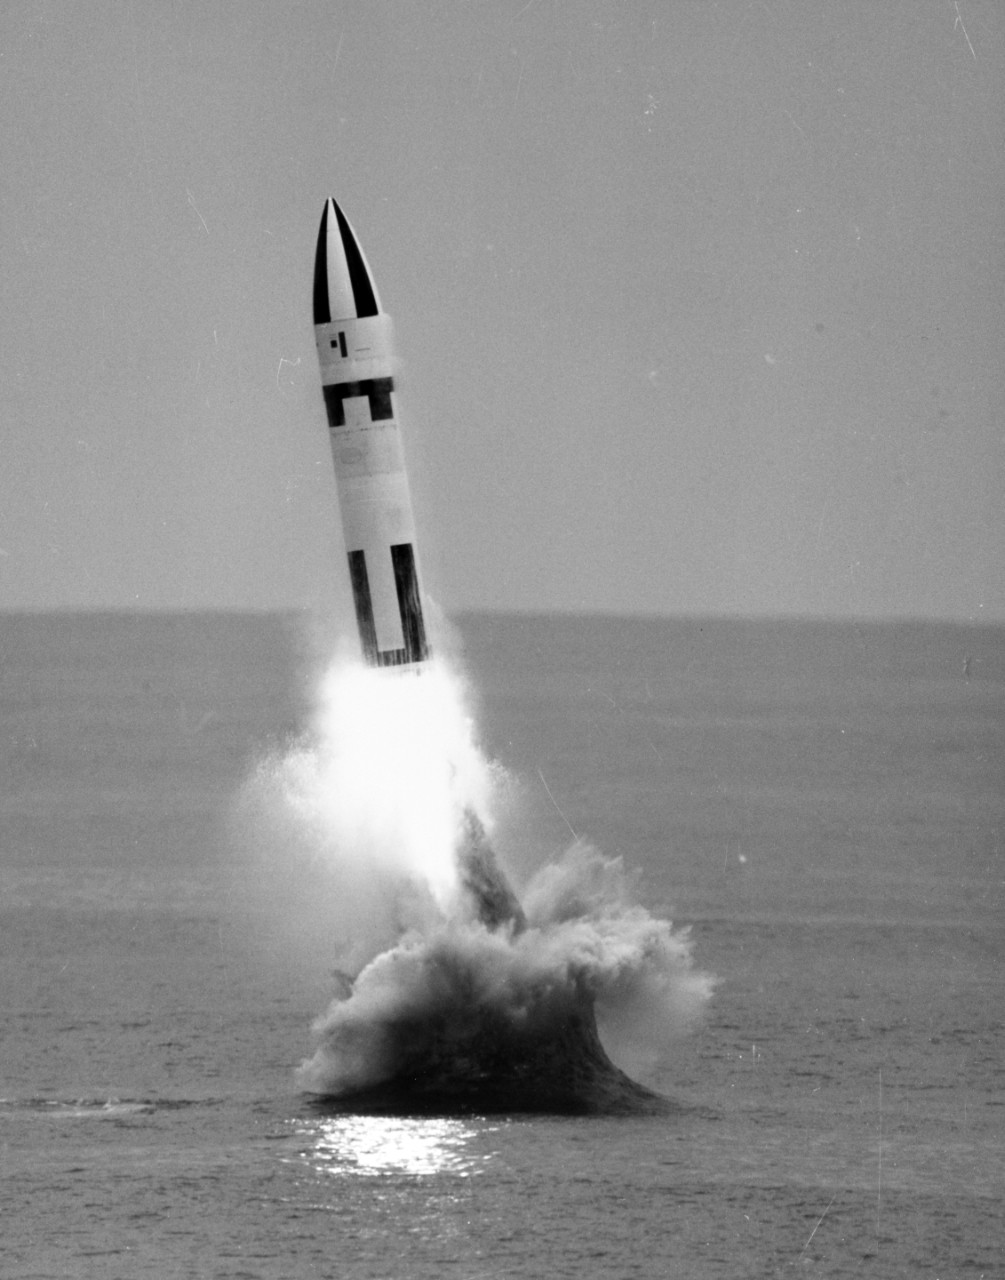 Polaris A-3 Missile